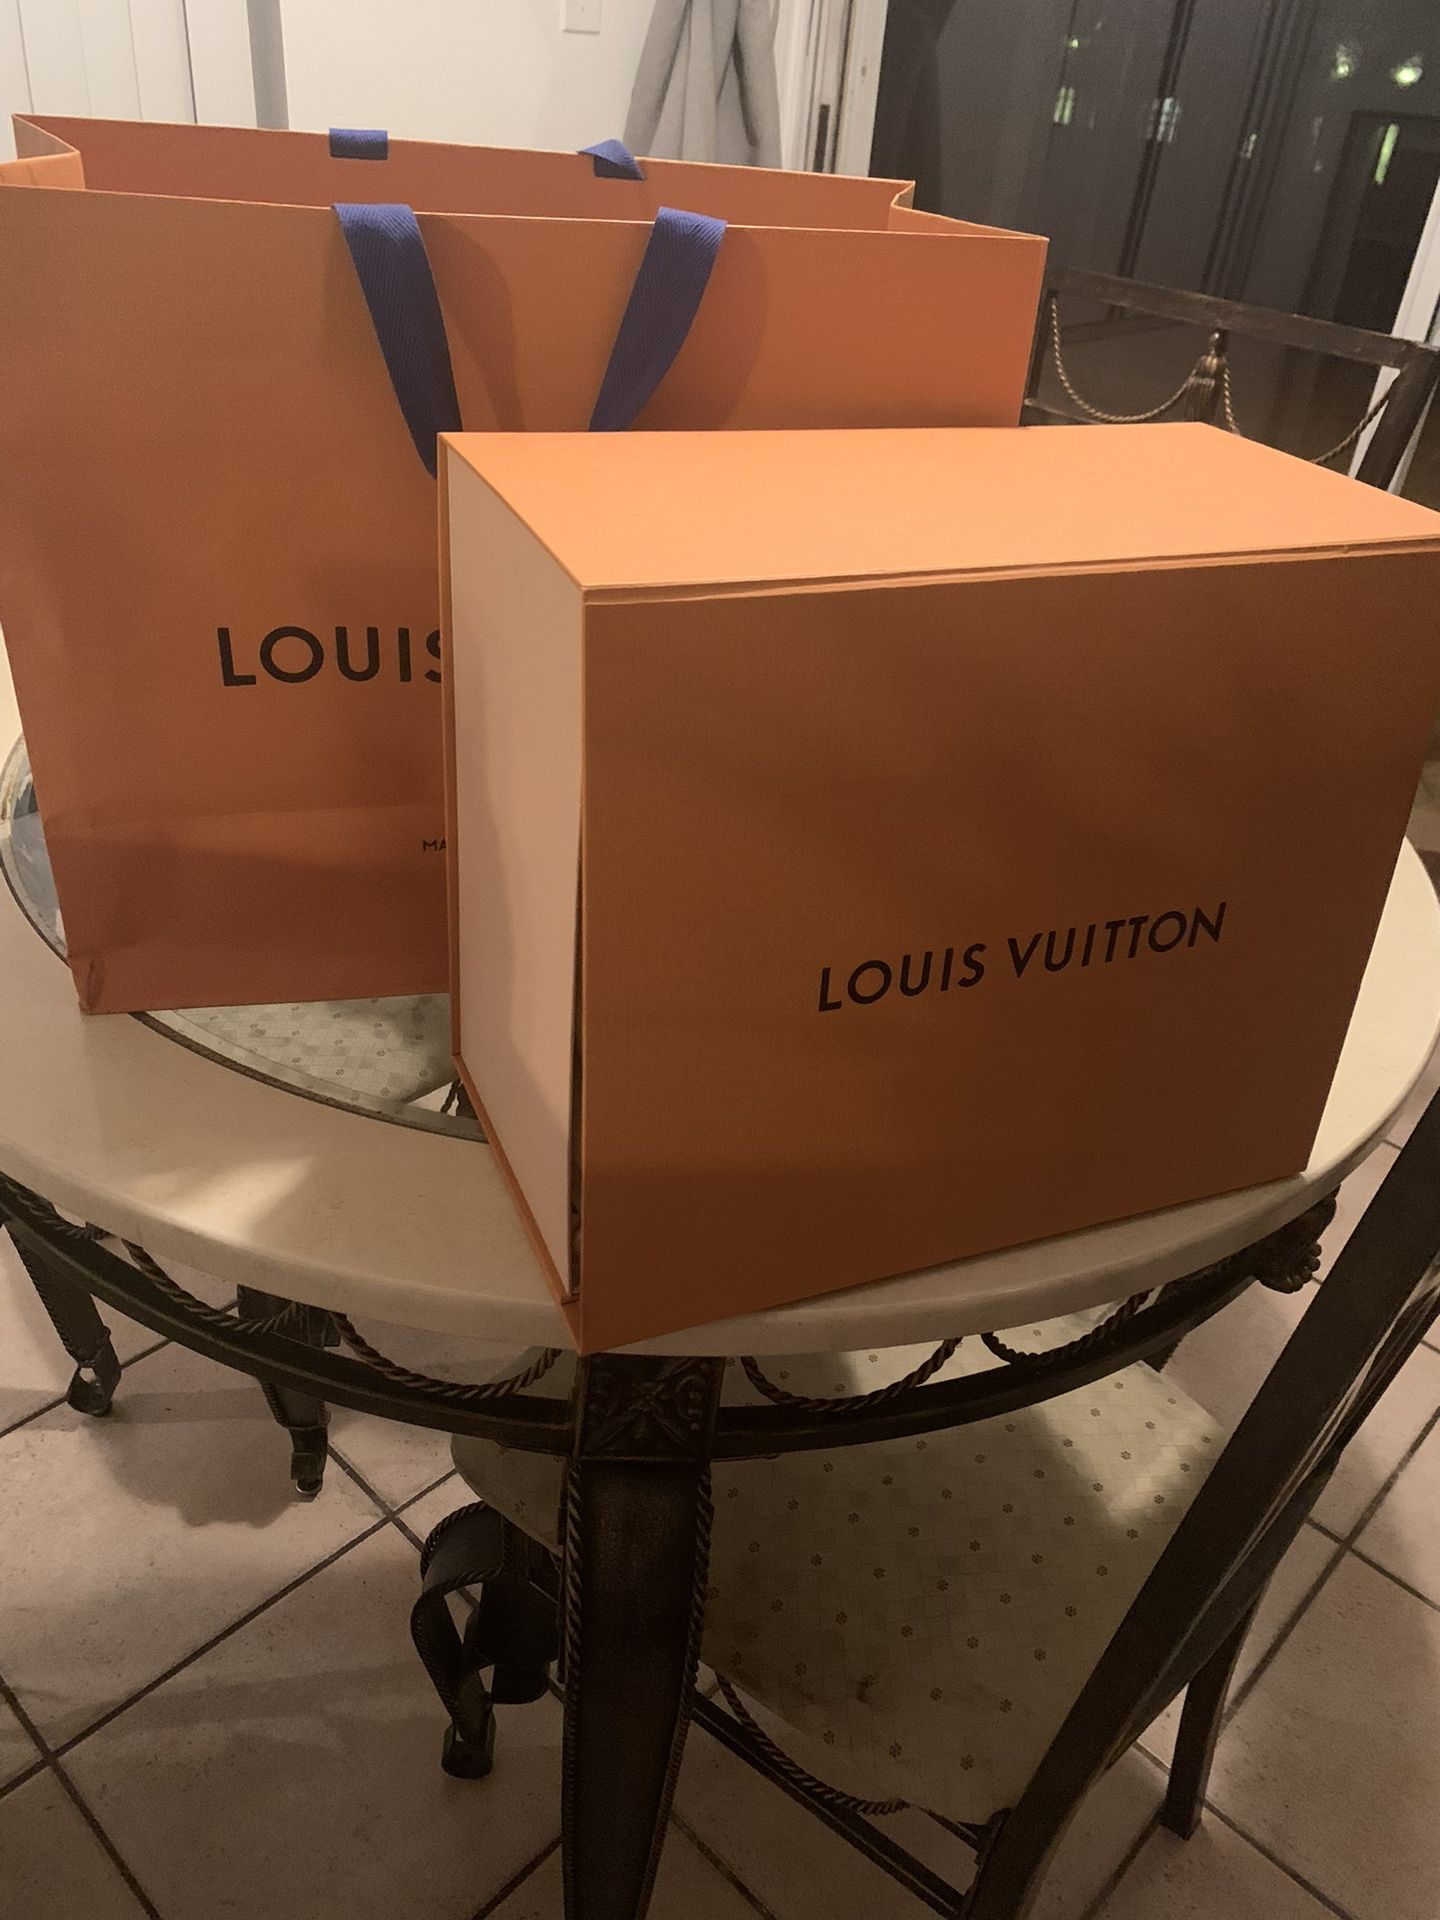 Louis Vuitton Cabas OnTheGo MM Khaki colour for Sale in Miami, FL - OfferUp